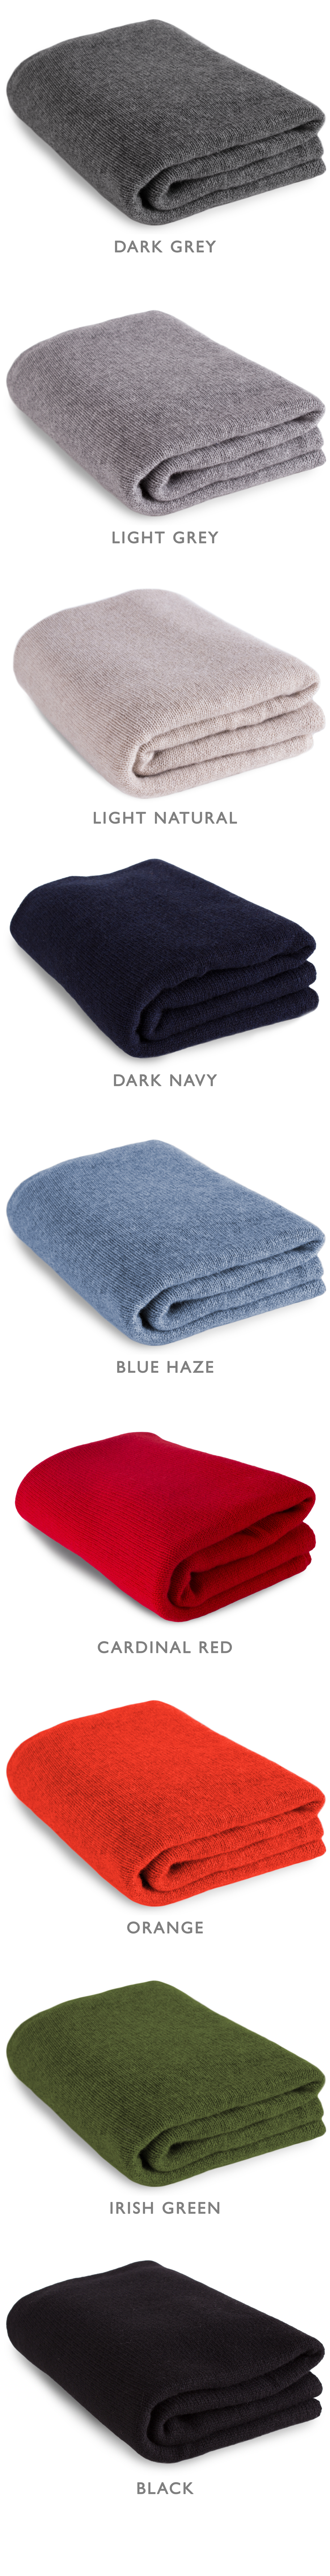 Super King Cashmere Bed Blanket - Made to Order